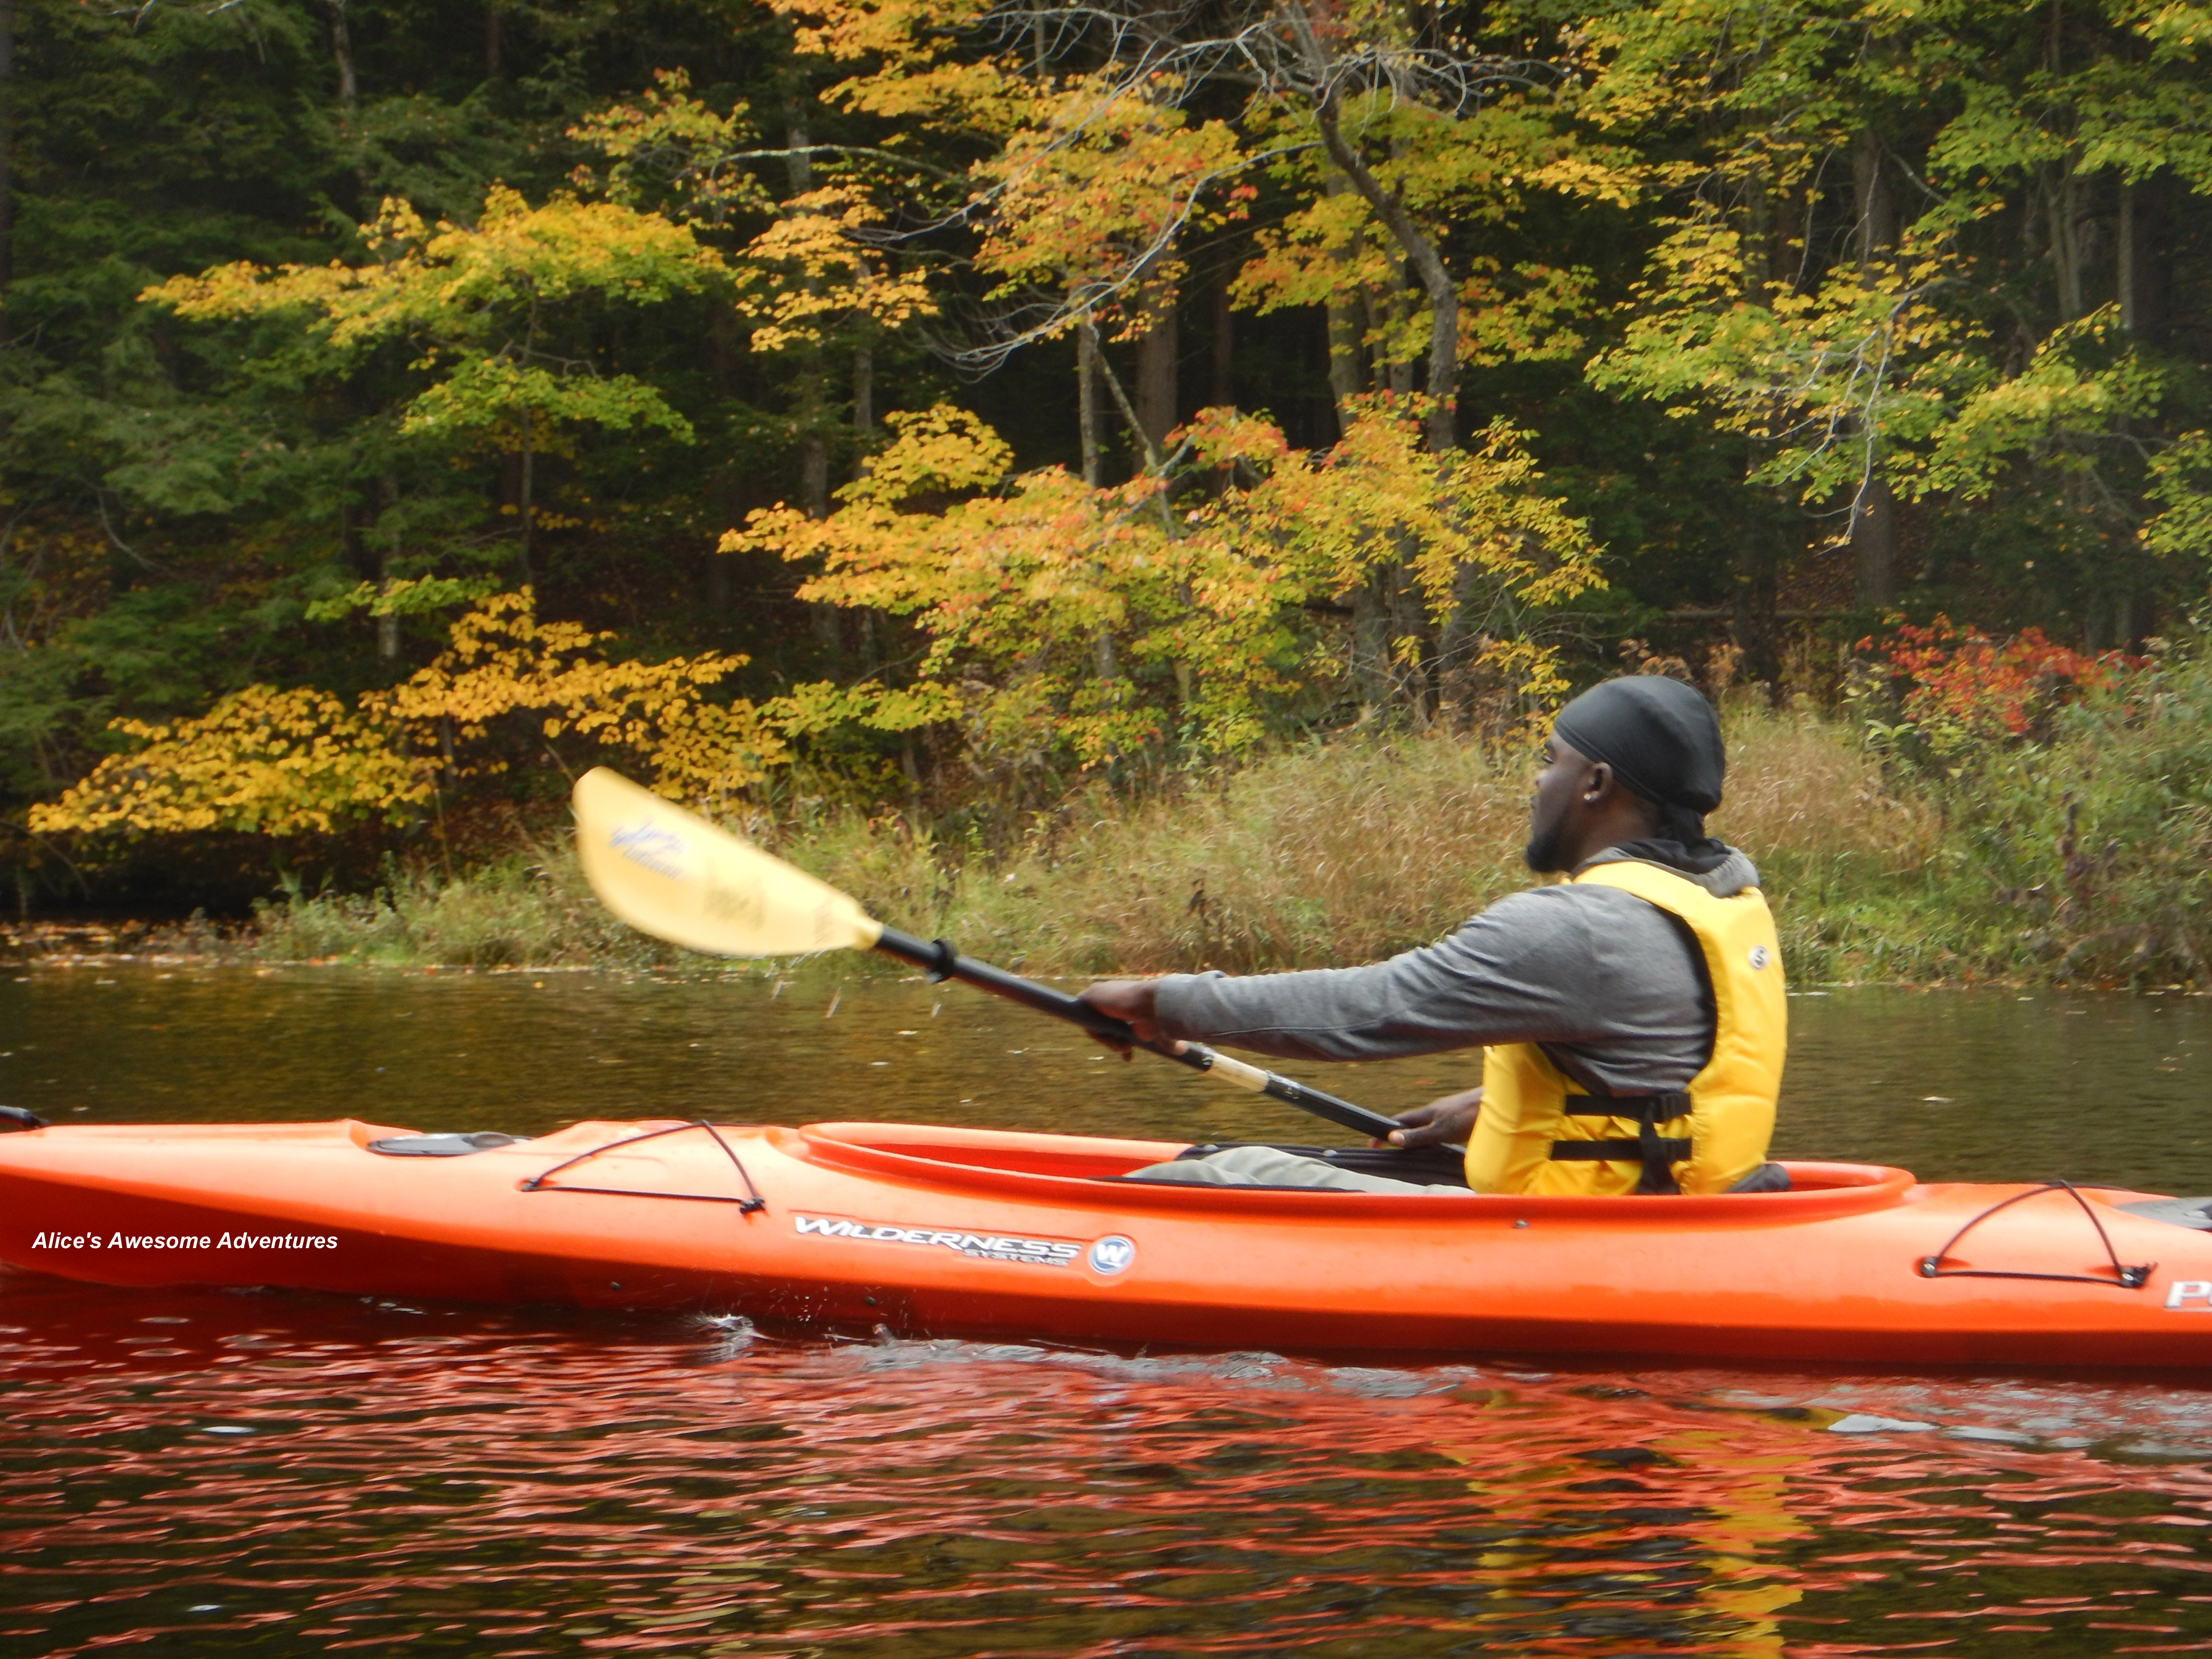 Sea kayaking with fall folliage